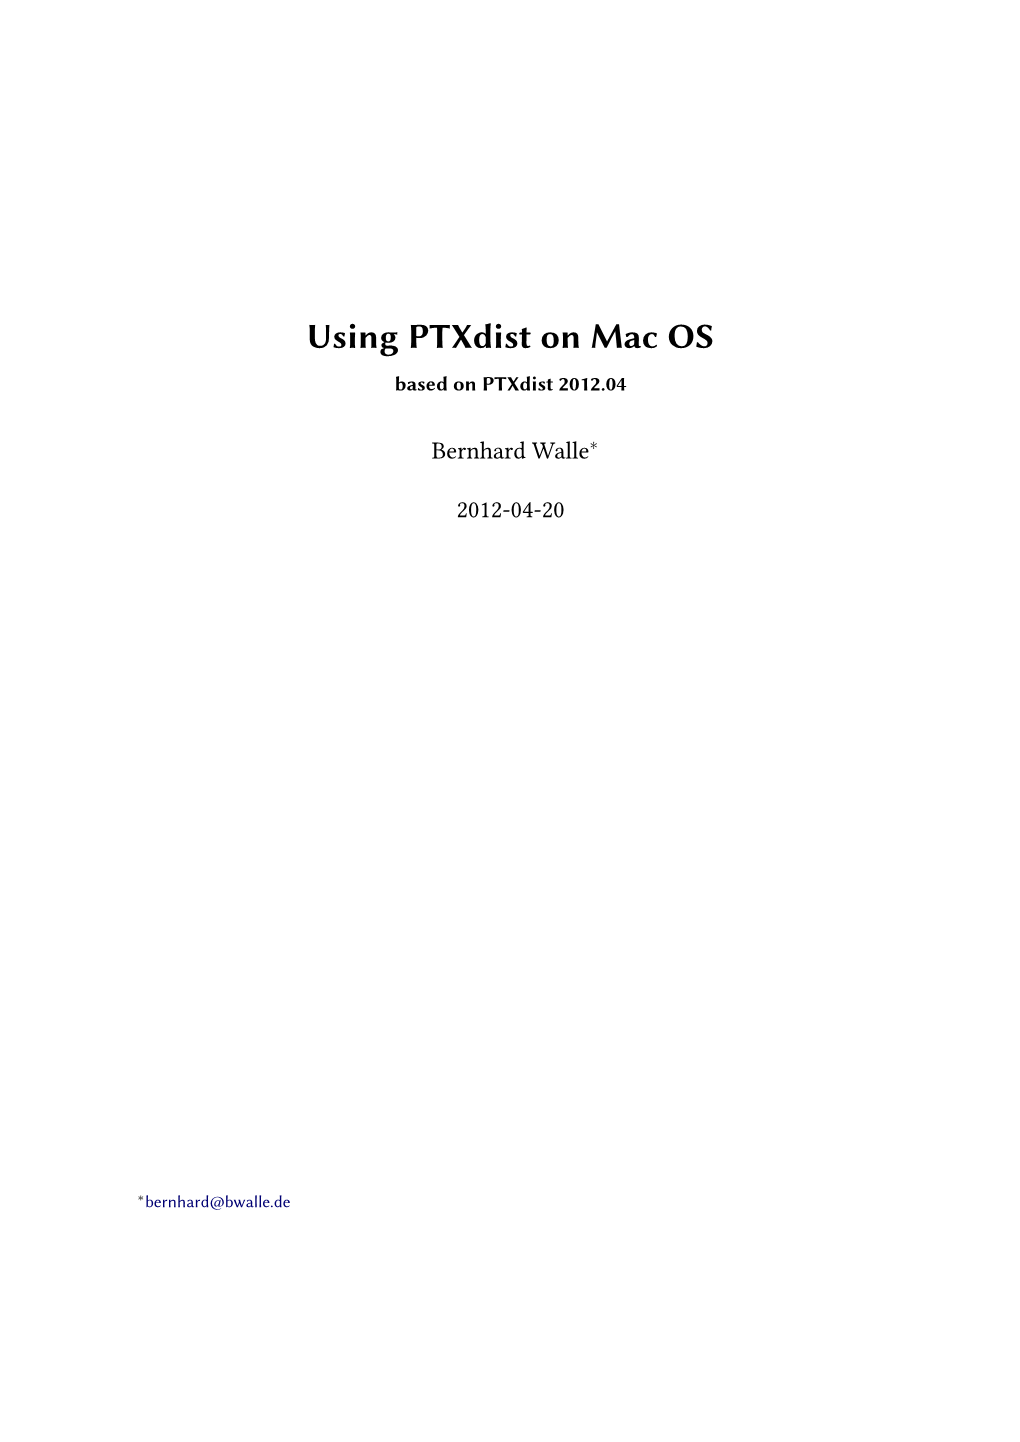 Using Ptxdist on Mac OS Based on Ptxdist 2012.04